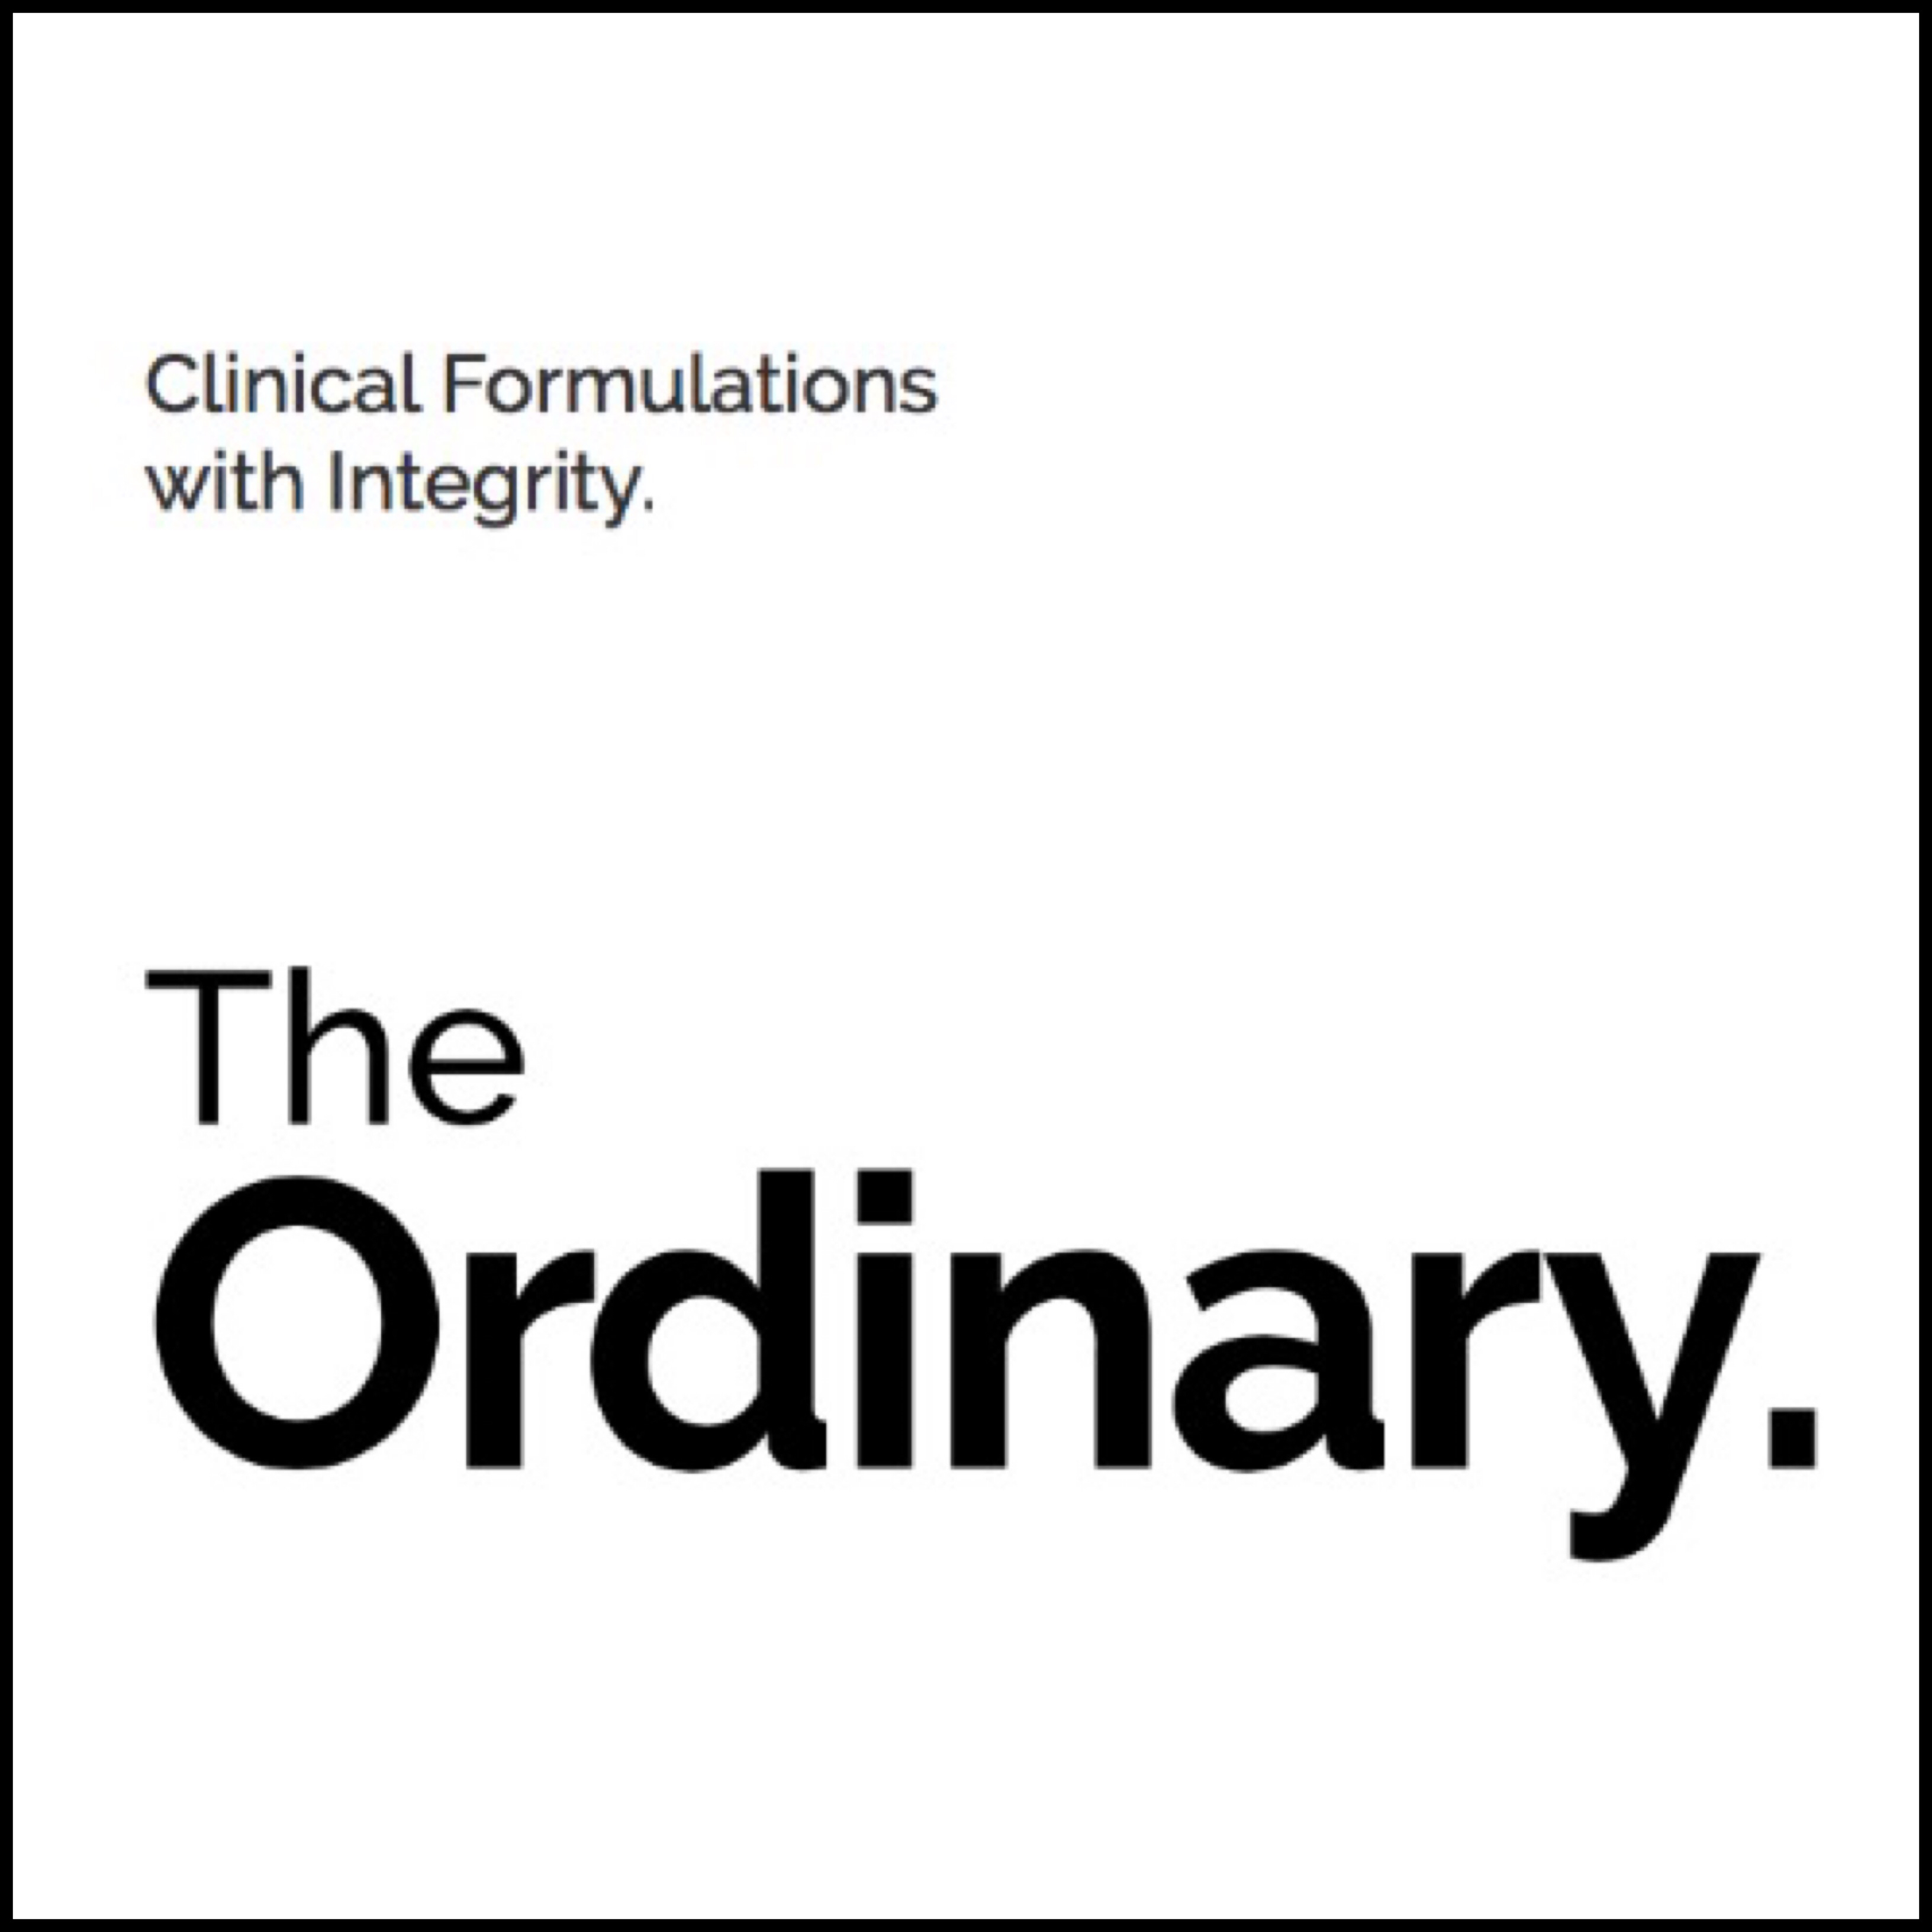 The ordinary